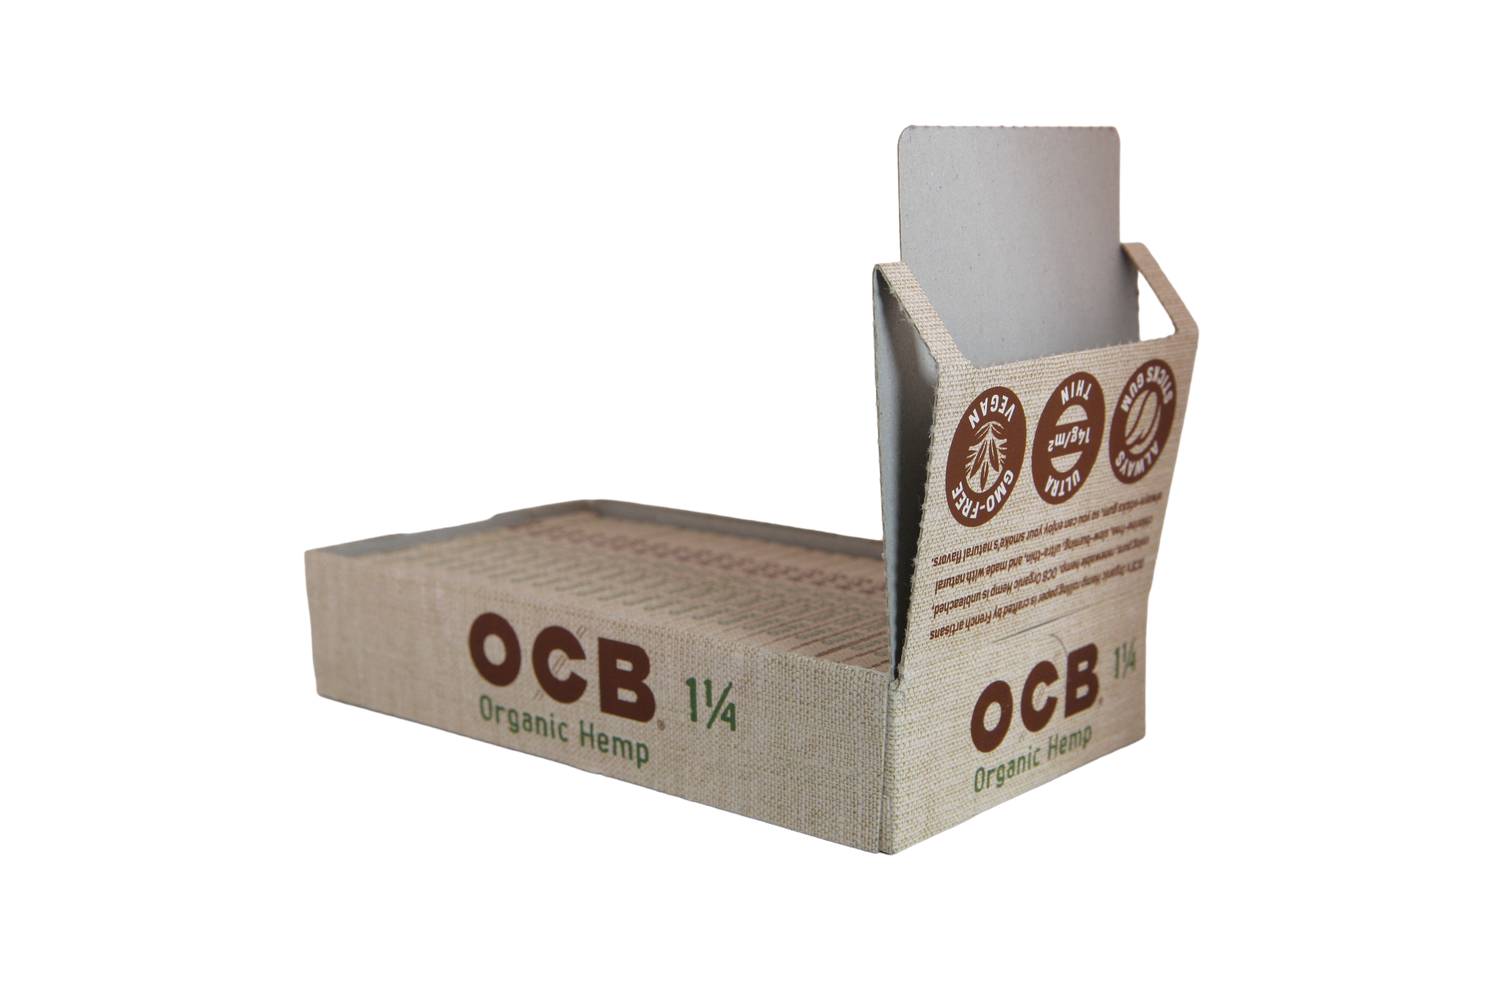 OCB Organic Hemp Papers - 1 1/4 / Box of 24